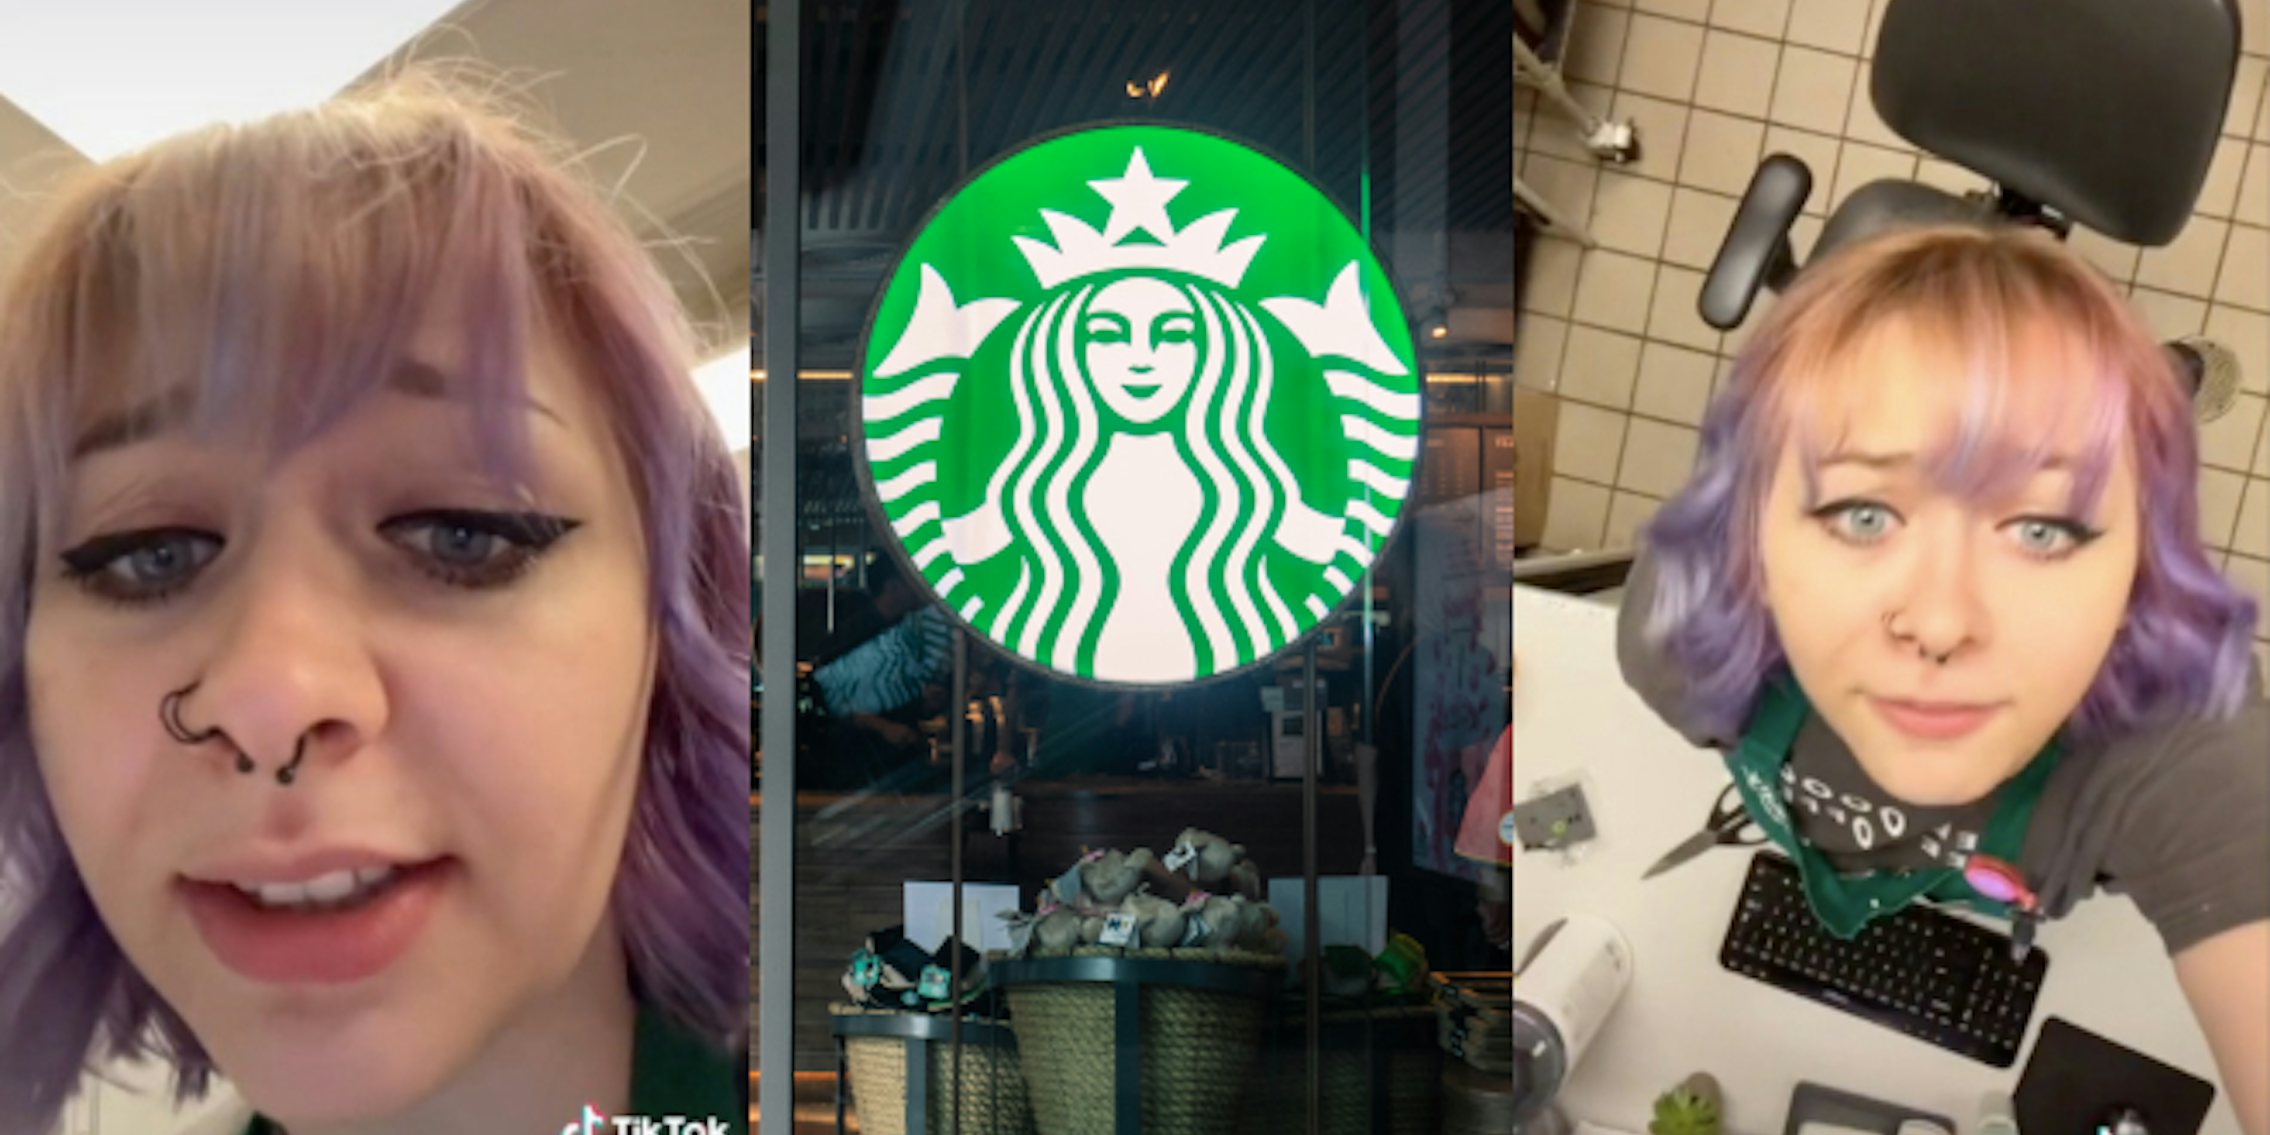 Starbucks employee (l) Starbucks sign in window (c) Starbucks employee (r)